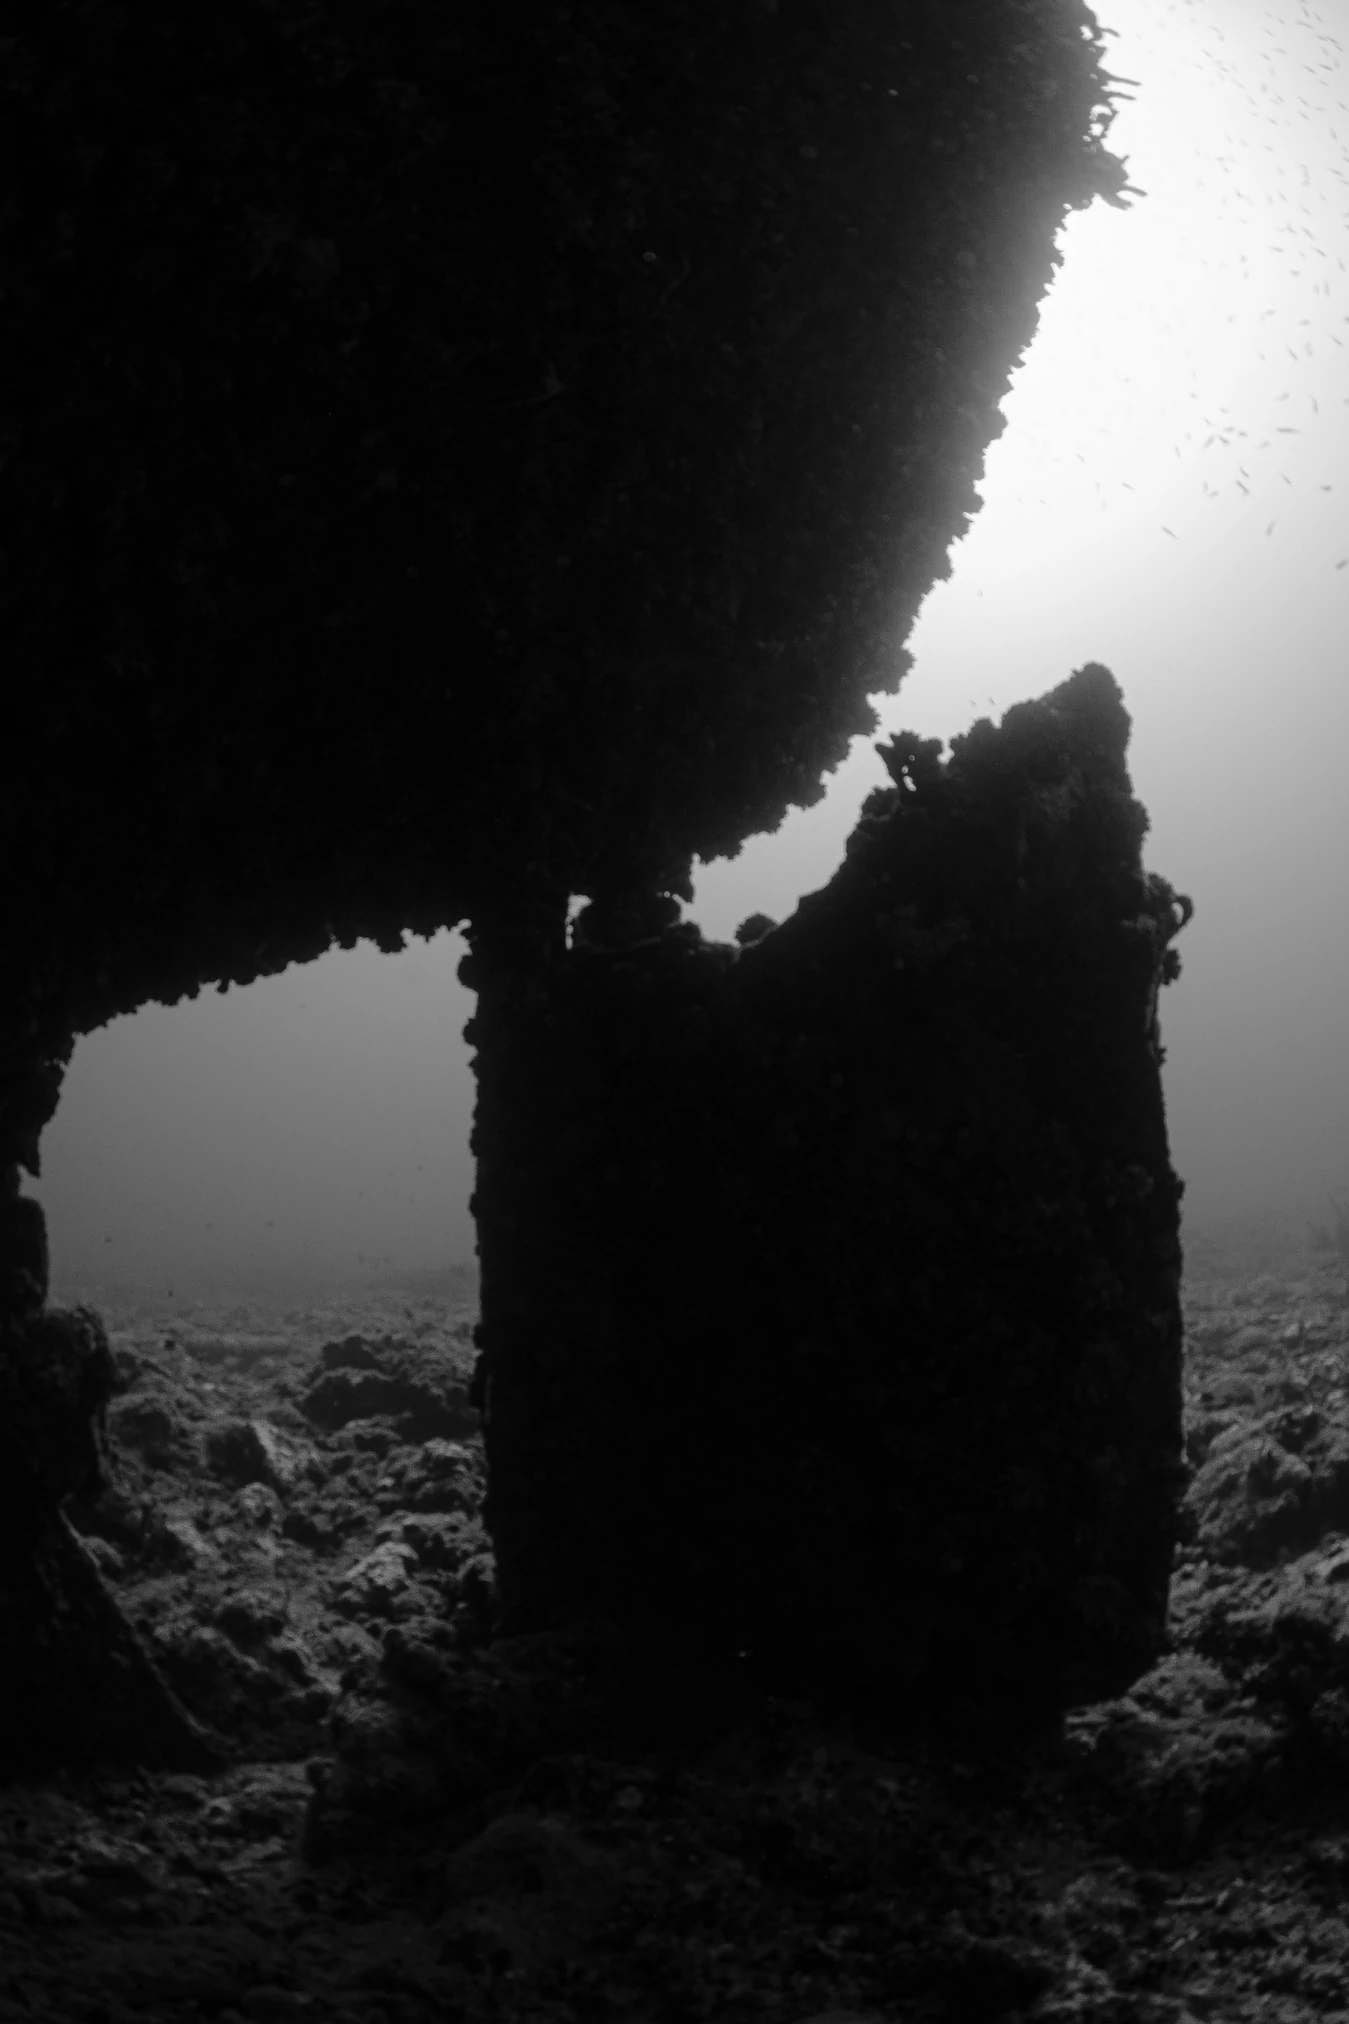 black-and-white shot of the Veronica L shipwreck